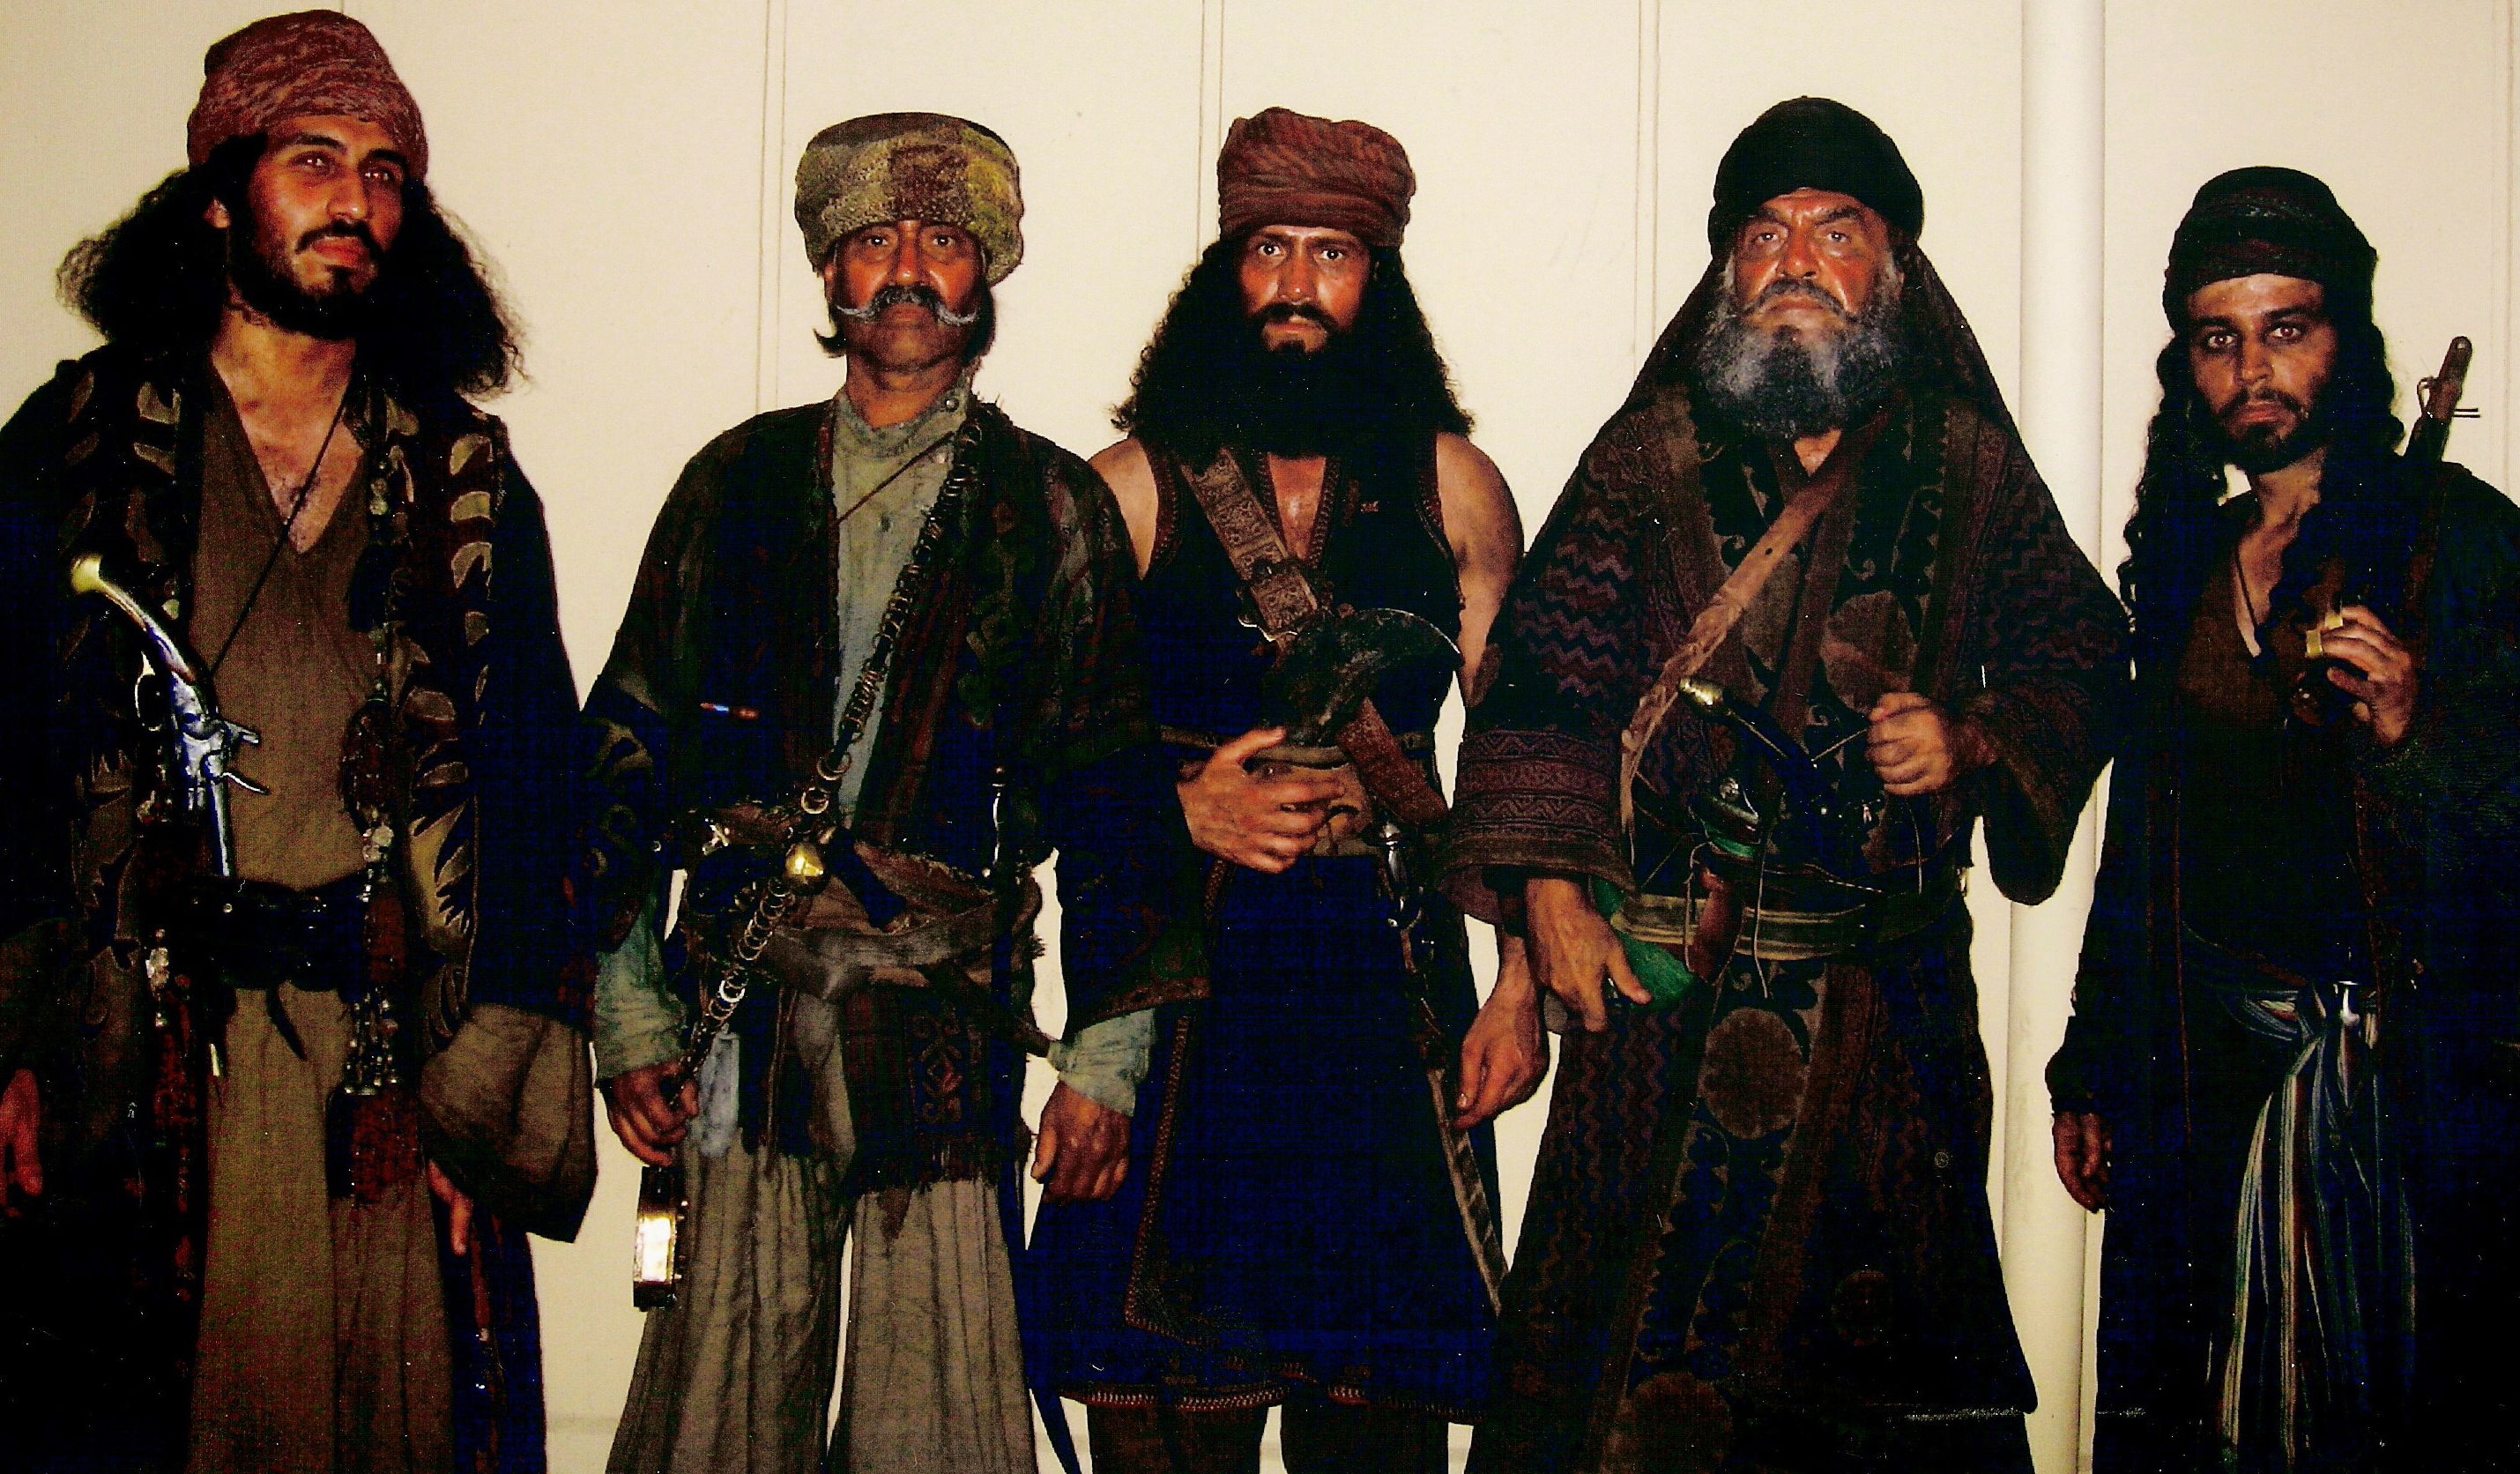 Turkish pirates from 